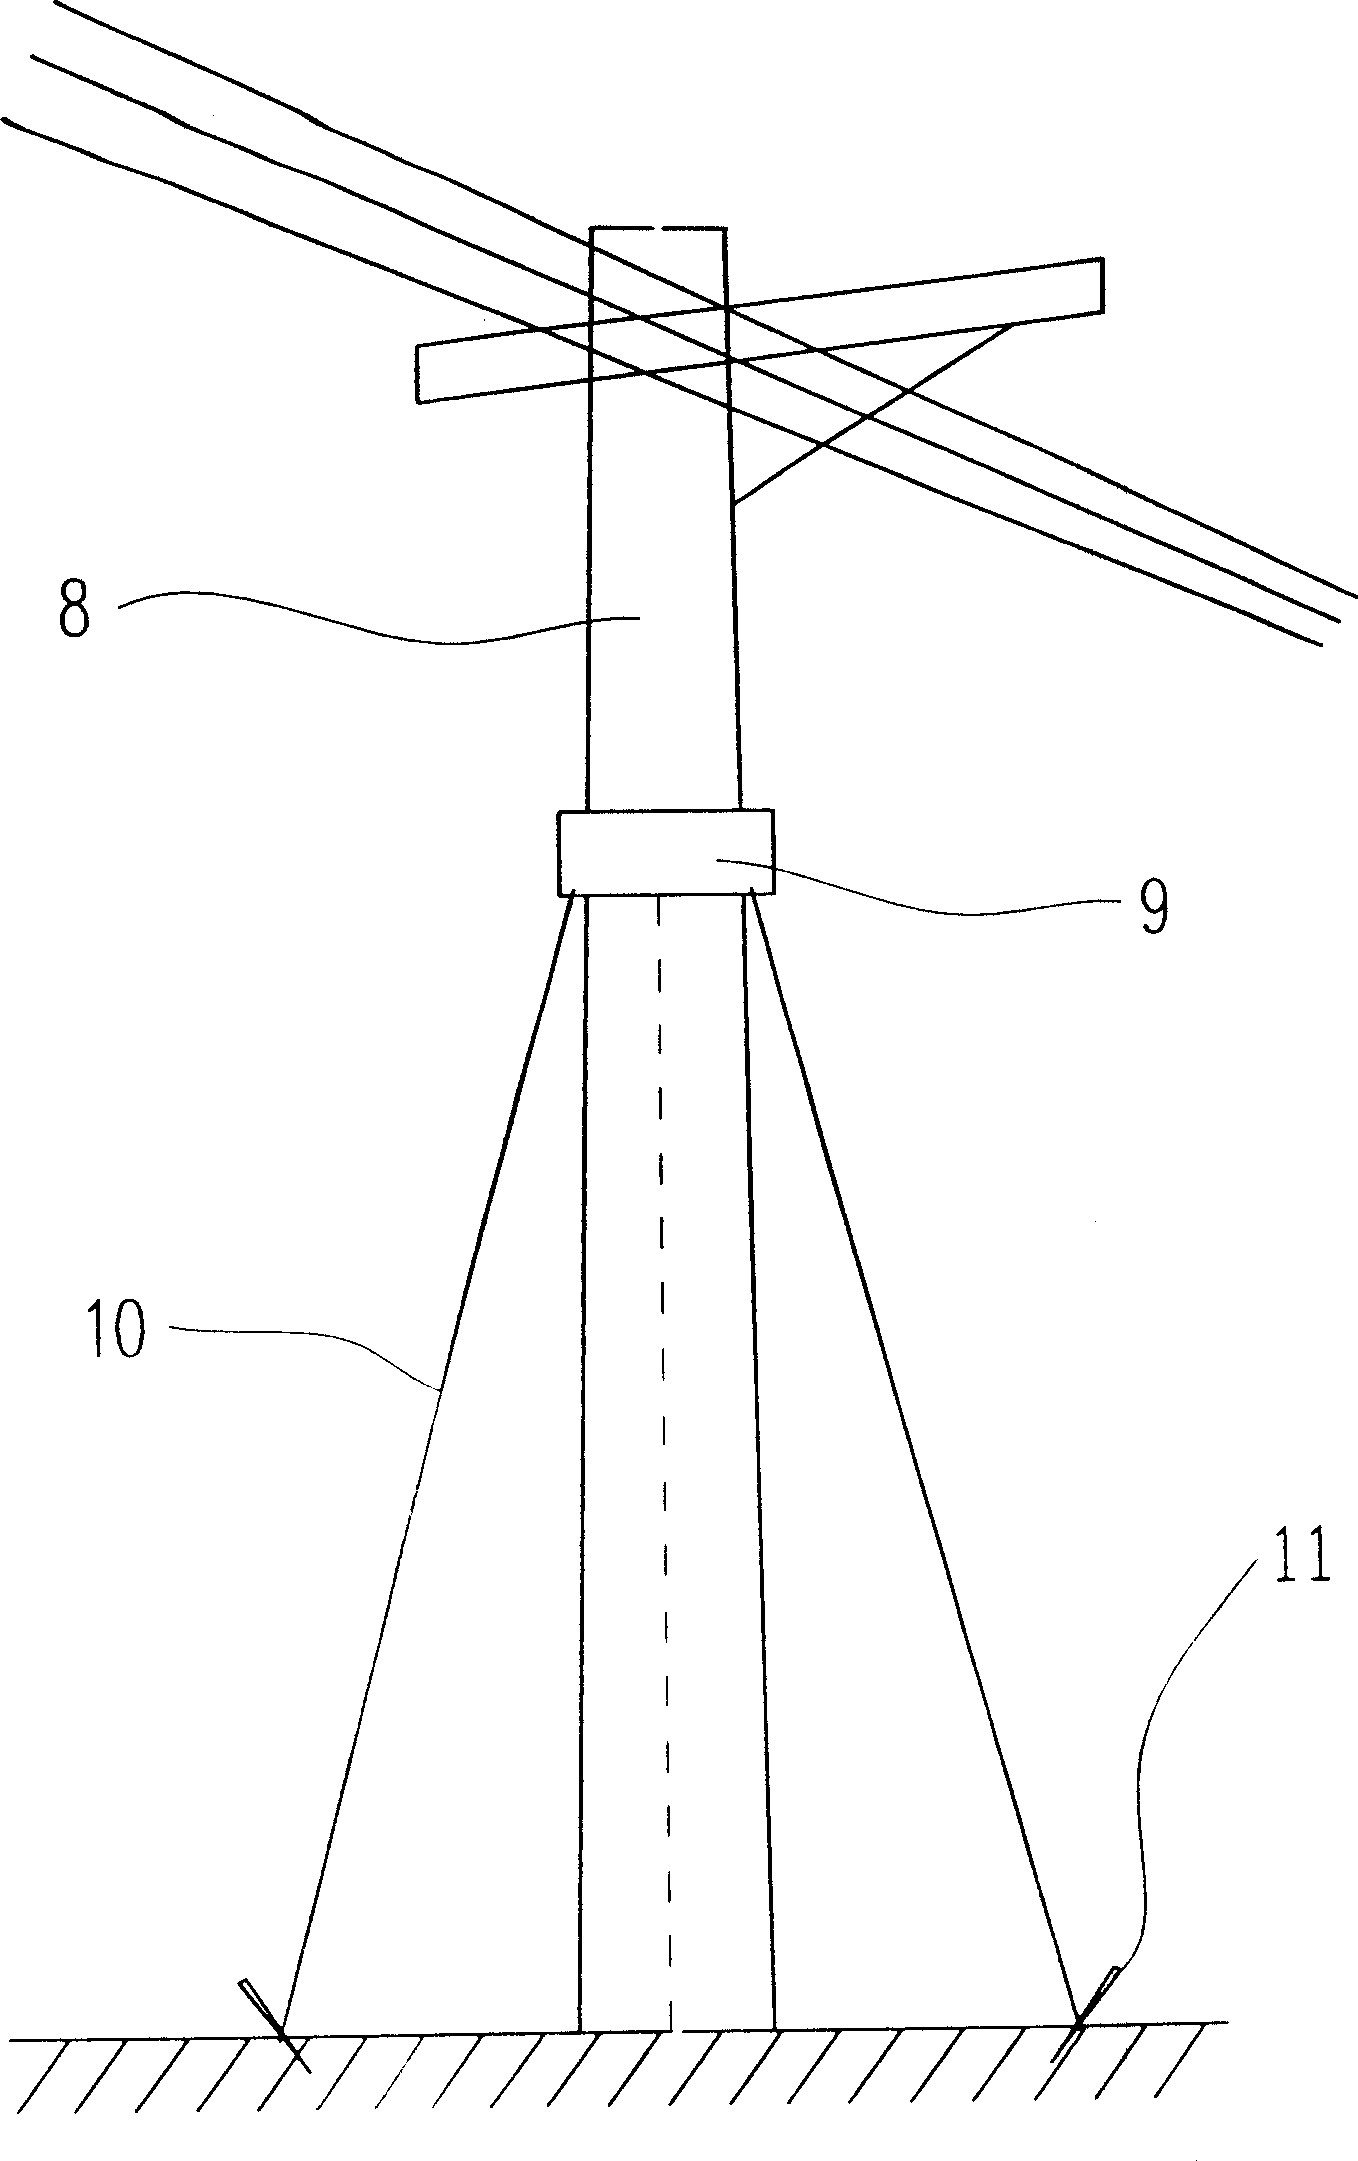 Anti-reversing device for pole